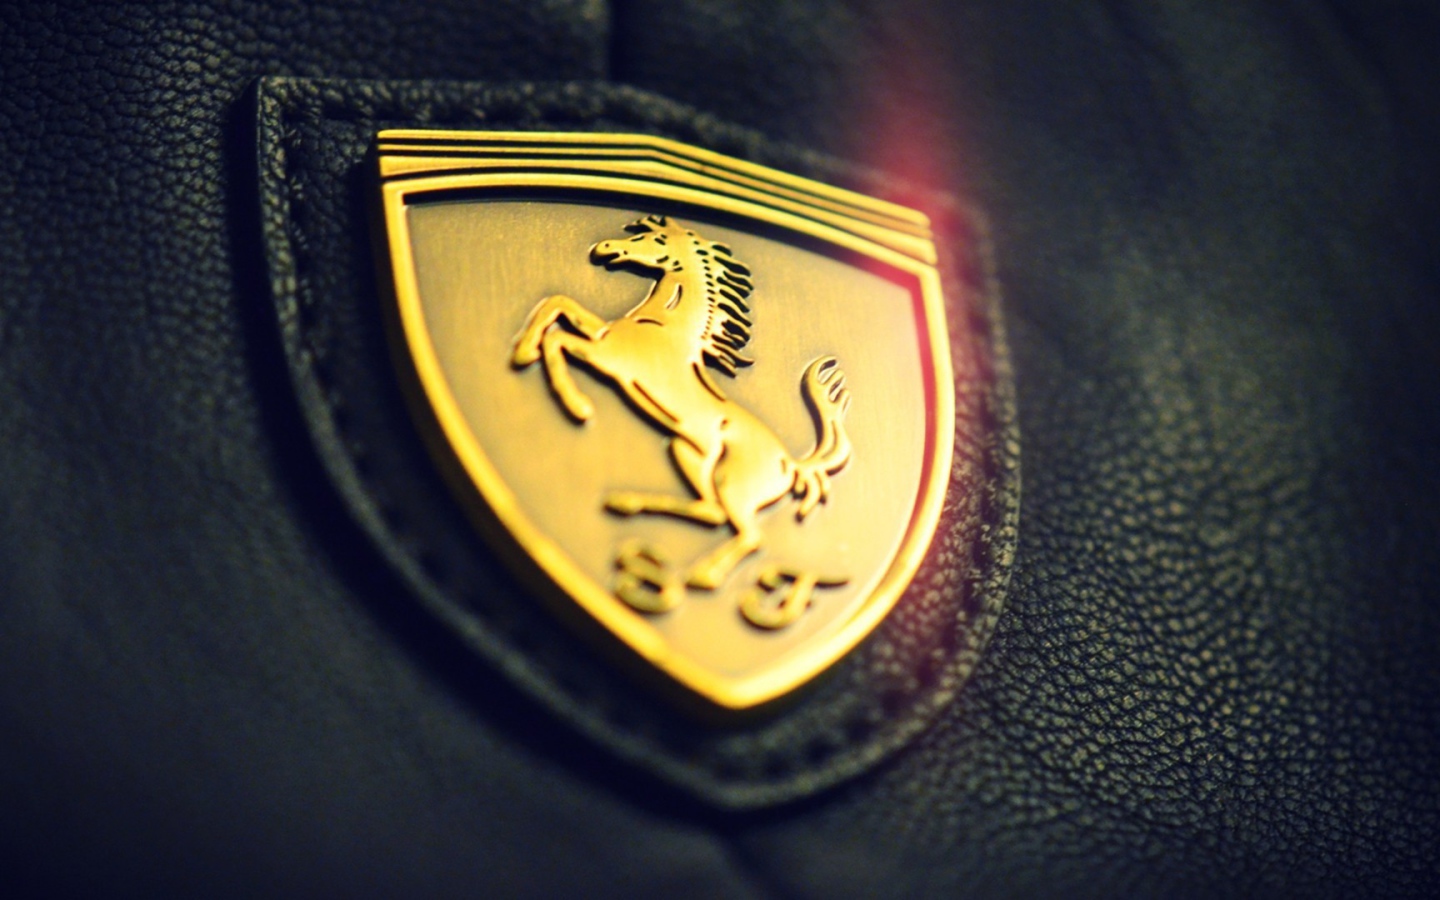 Golden symbol of Ferrari on black leather